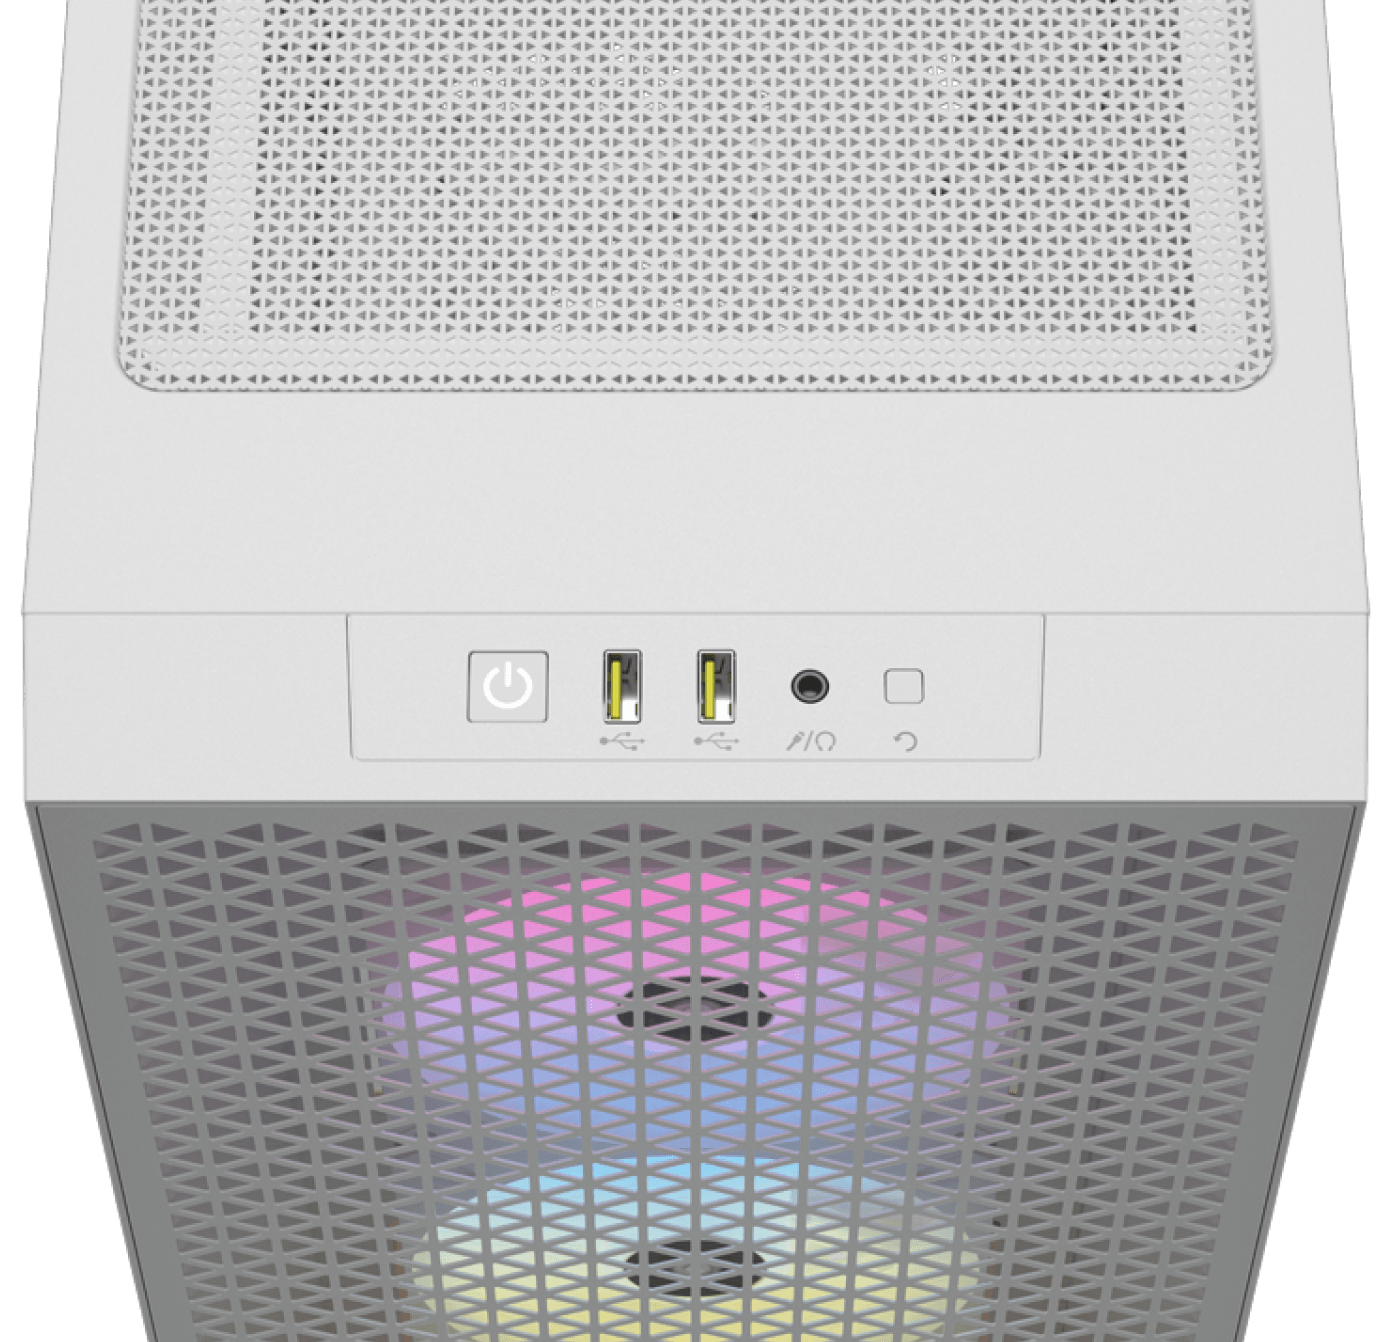 3000D RGB AIRFLOW Mid-Tower PC Case - Black